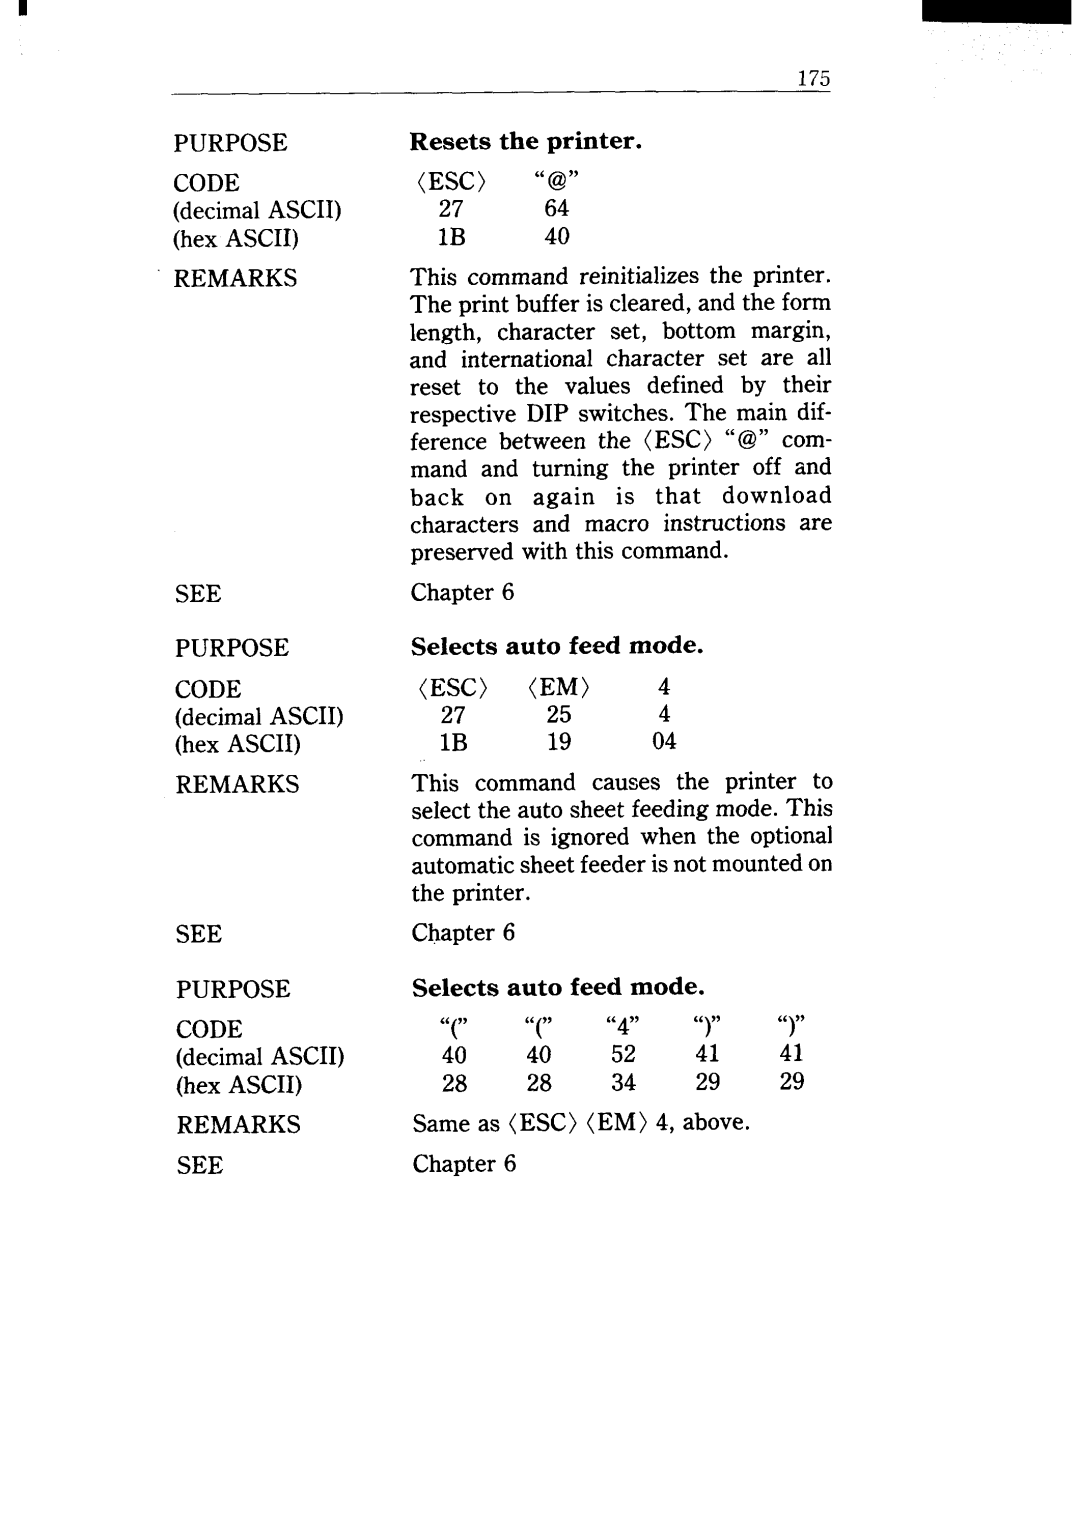 Star Micronics NX-15 user manual PURPOSE CODE decimal ASCII hex ASCII 